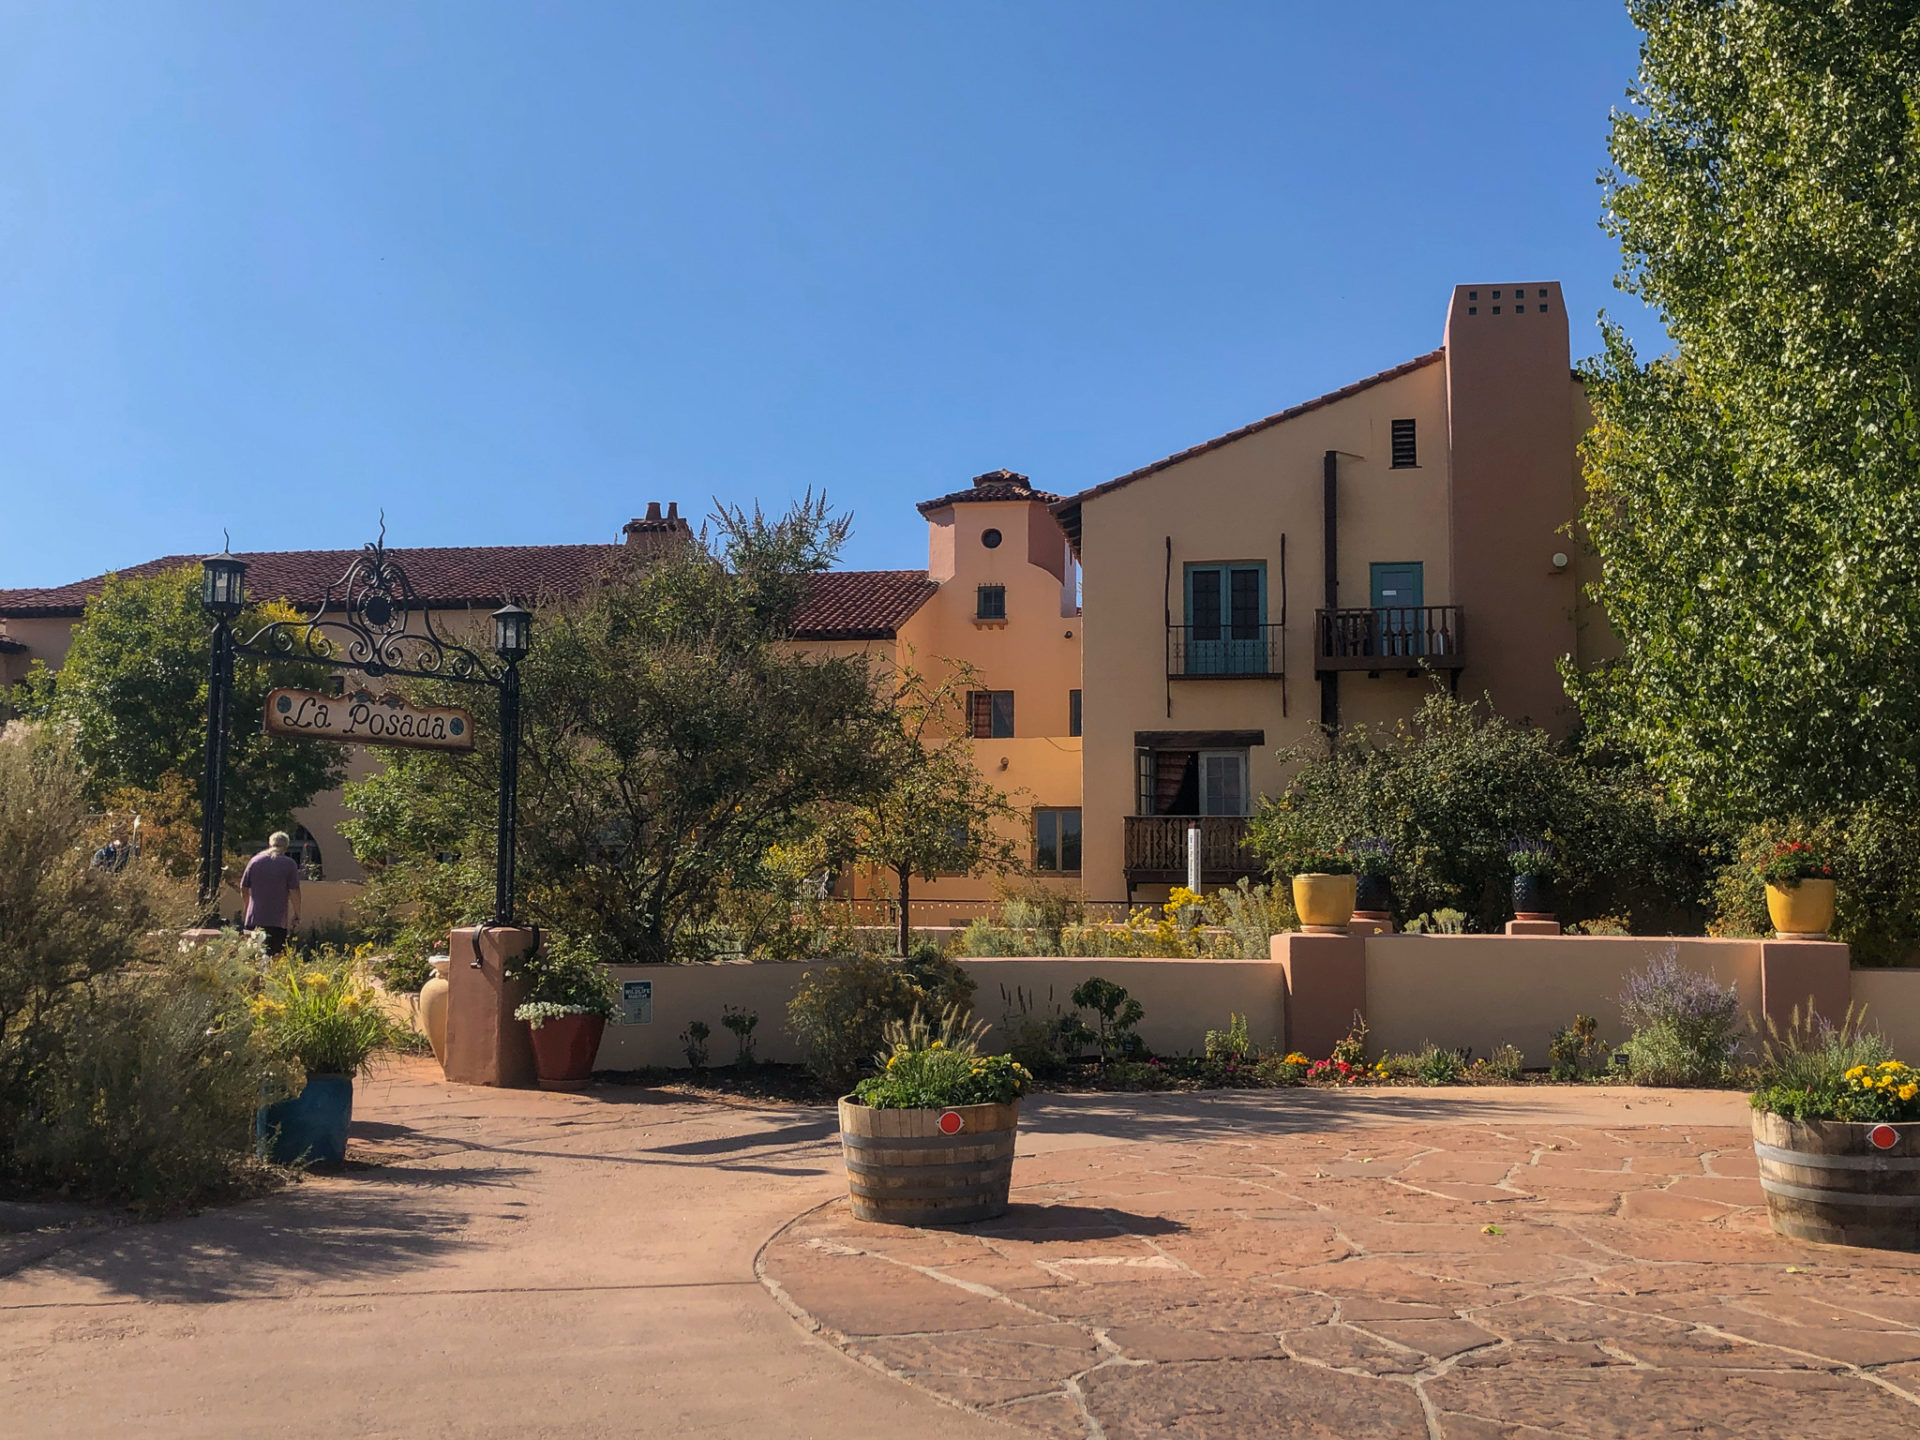 Das Hotel La Posada in Winslow in Arizona